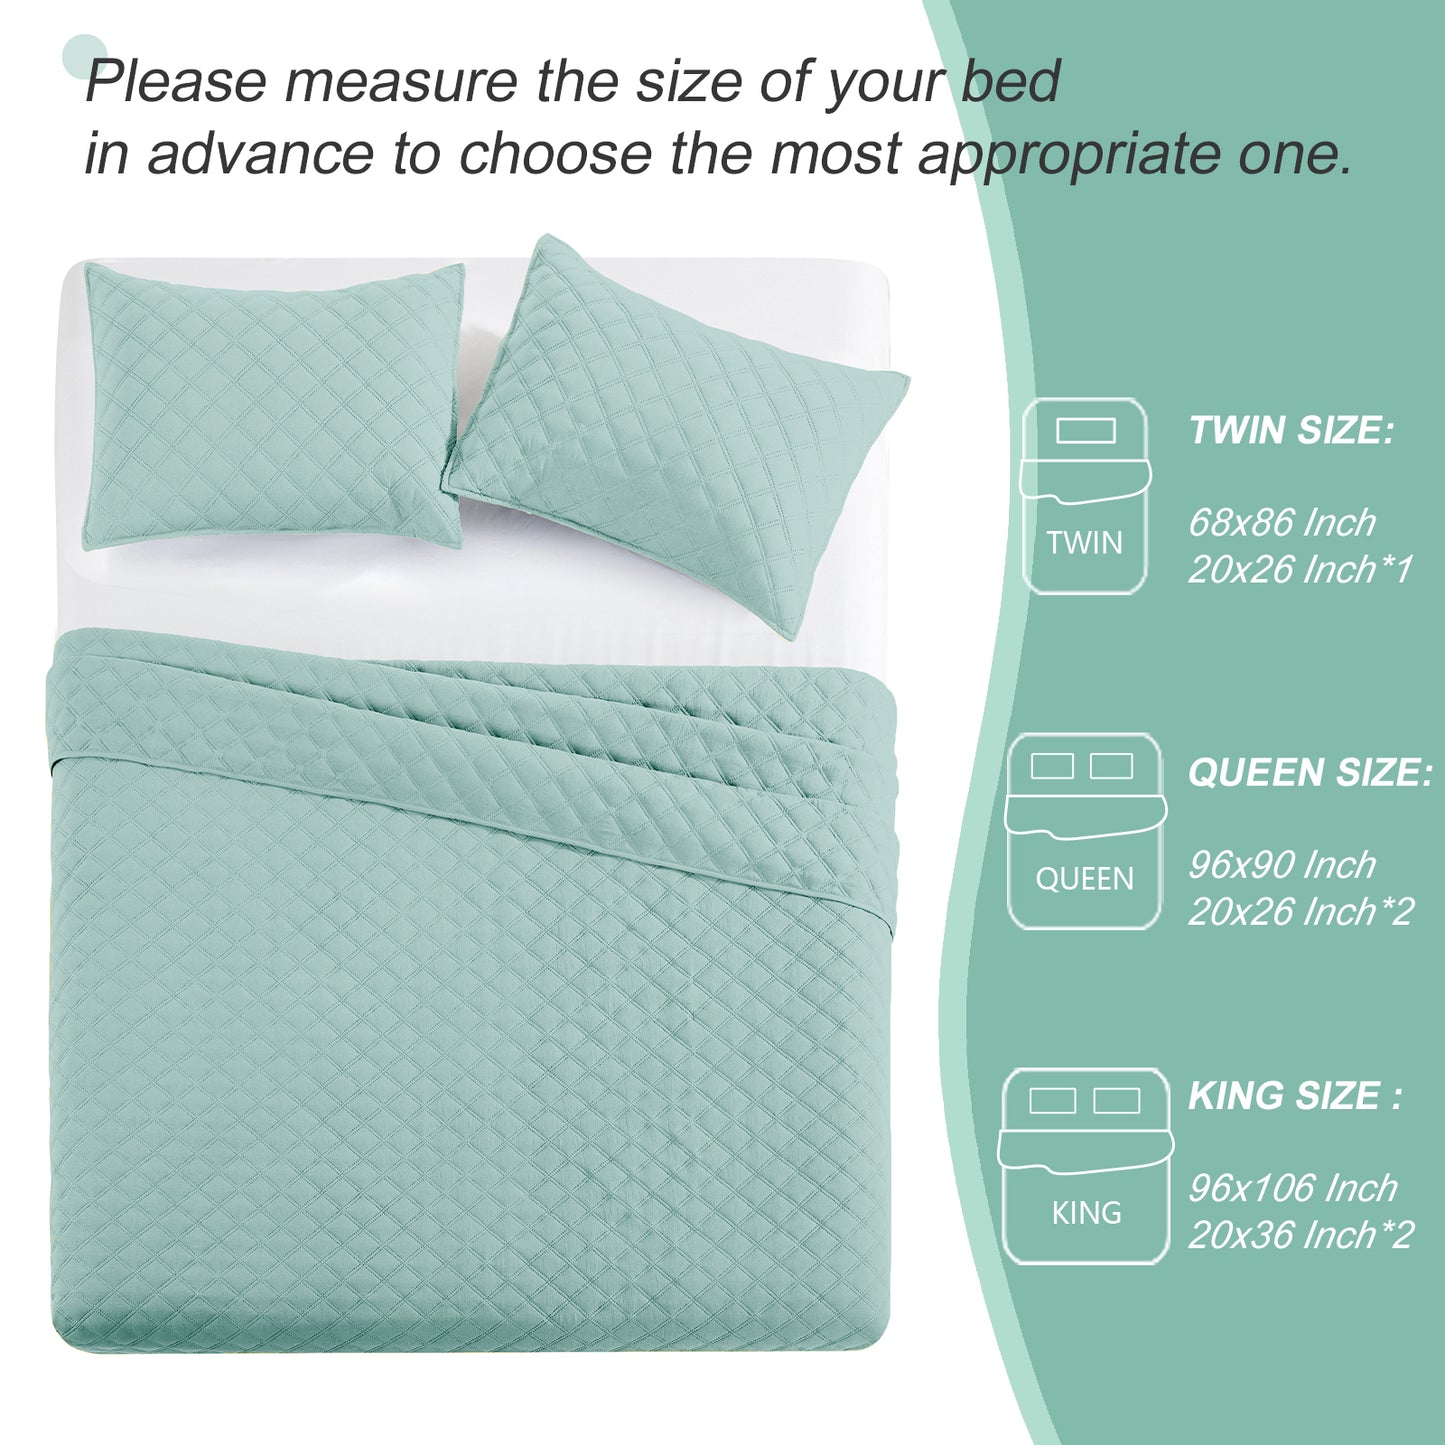 Exclusivo Mezcla 2-Piece Aqua Twin Size Quilt Set, Box Pattern Ultrasonic Lightweight and Soft Quilts/Bedspreads/Coverlets/Bedding Set (1 Quilt, 1 Pillow Sham) for All Seasons